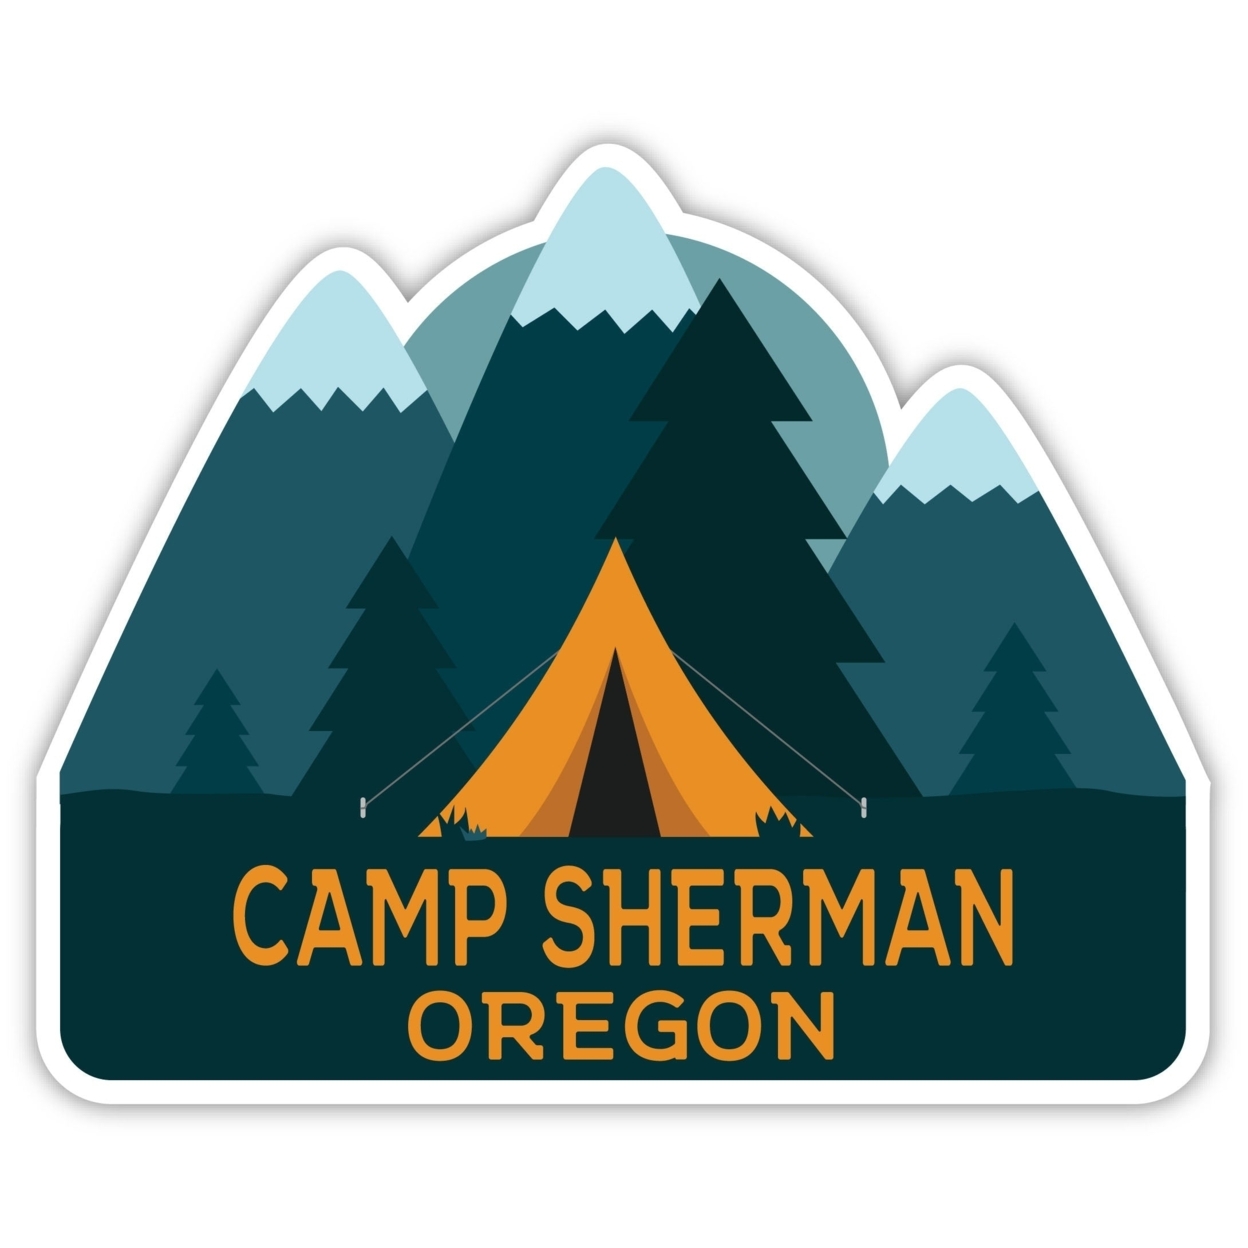 Camp Sherman Oregon Souvenir Decorative Stickers (Choose Theme And Size) - Single Unit, 8-Inch, Tent